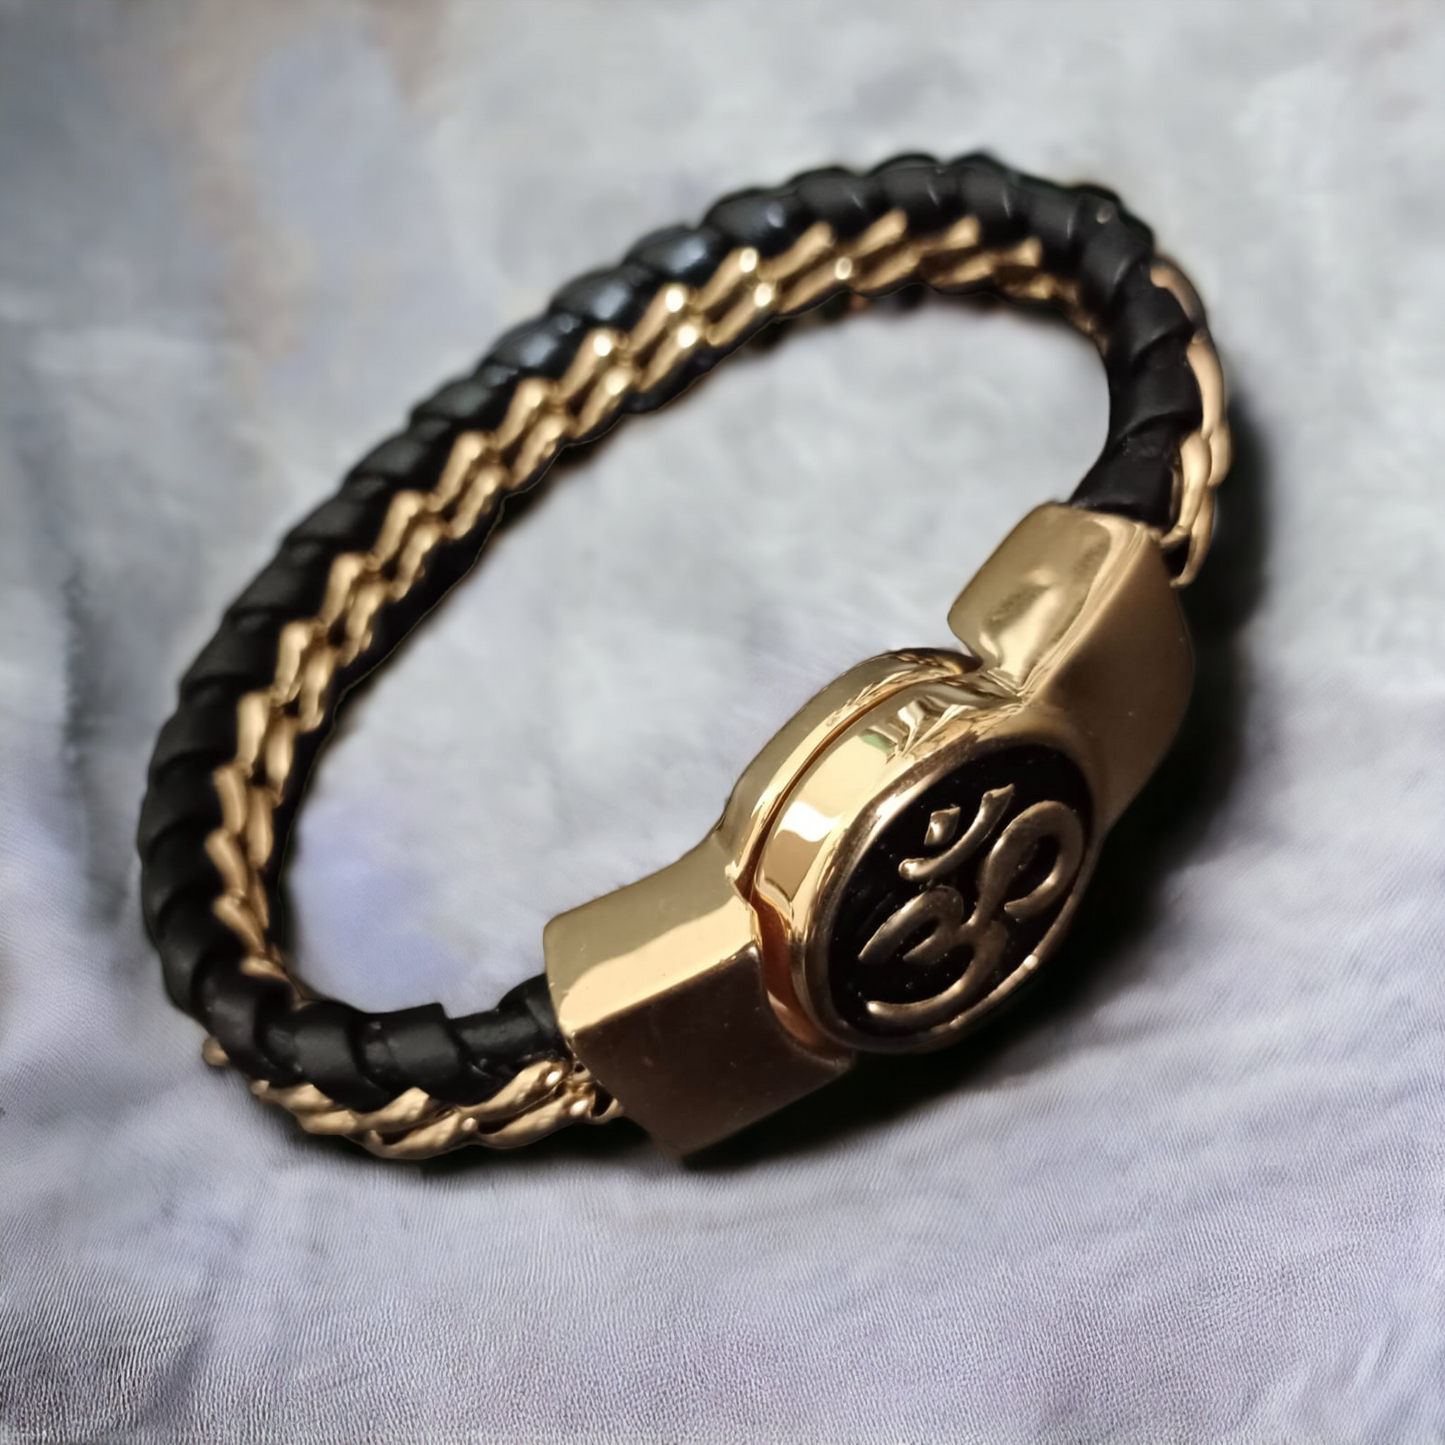 Jack Marc New OM Devotional Gold Bracelet For Men